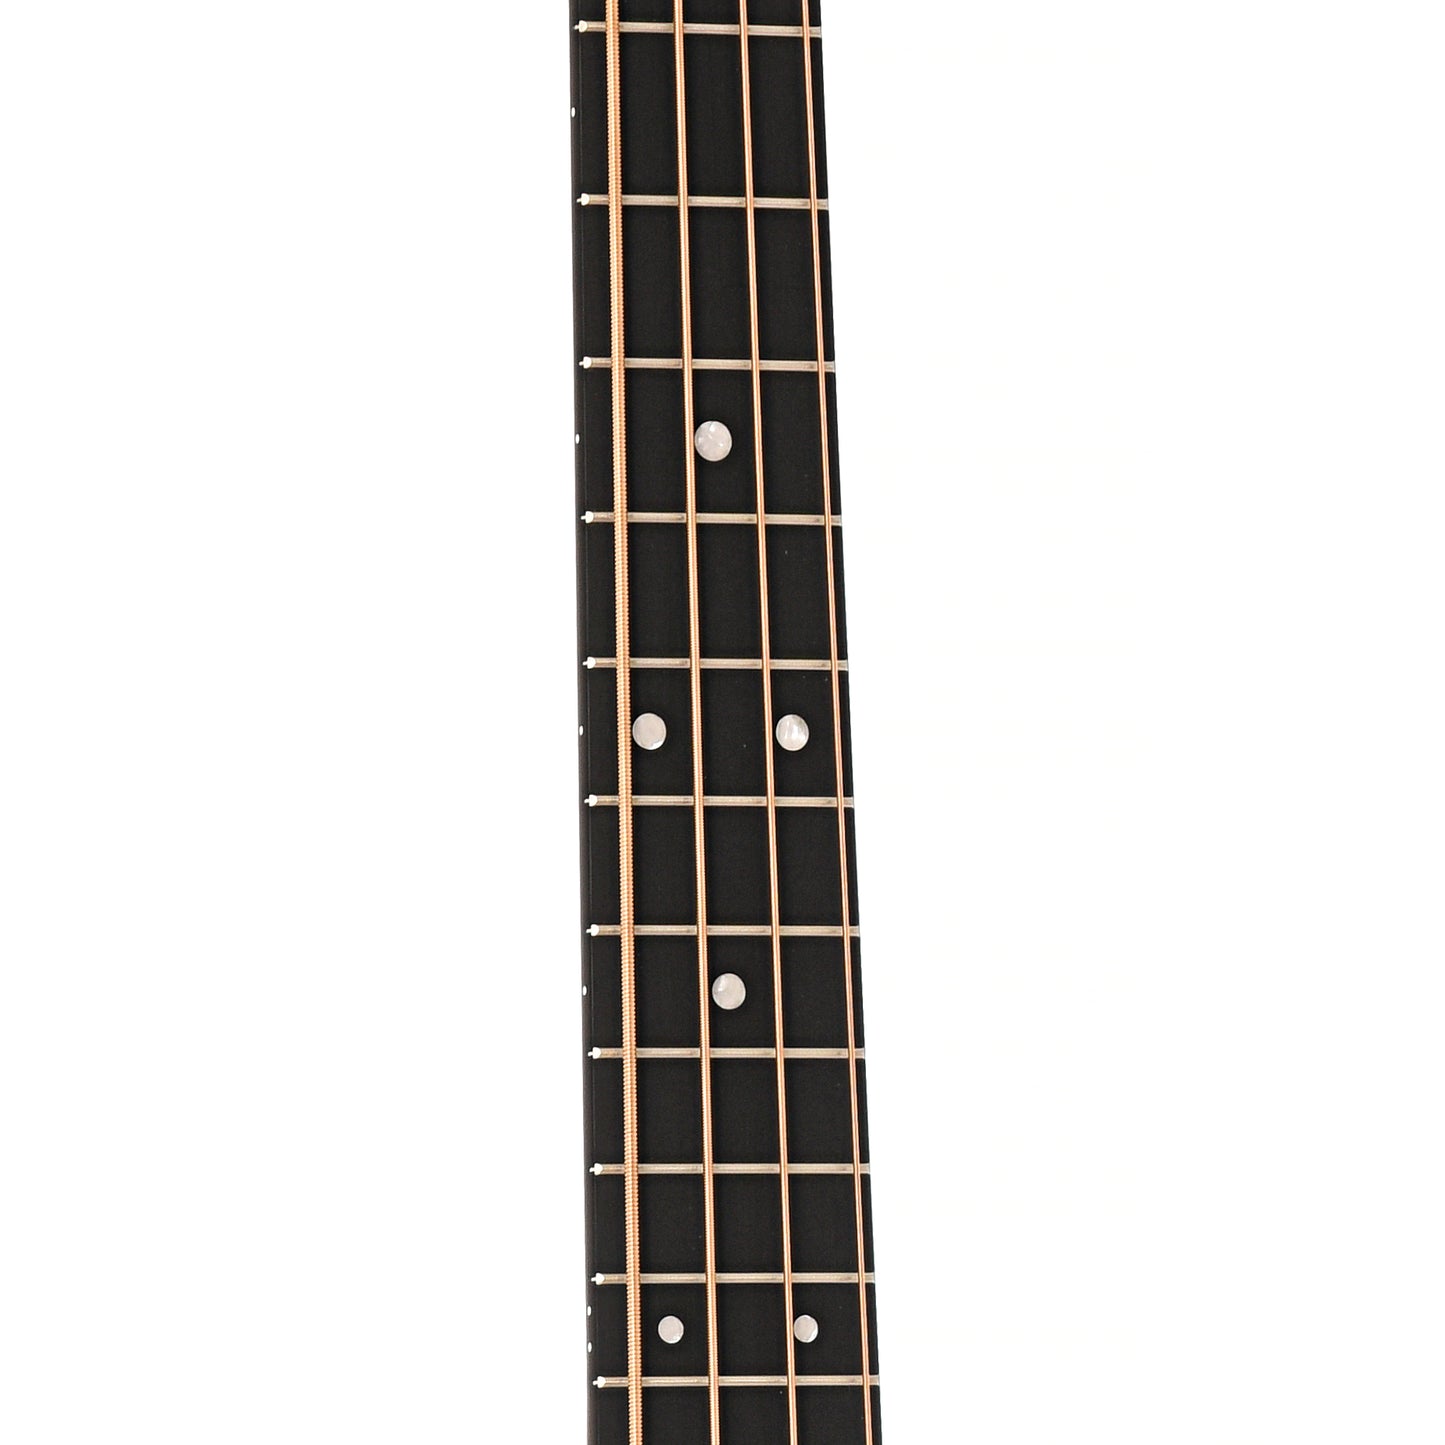 Fretboard of Martin 000CJR-10E Acoustic Bass